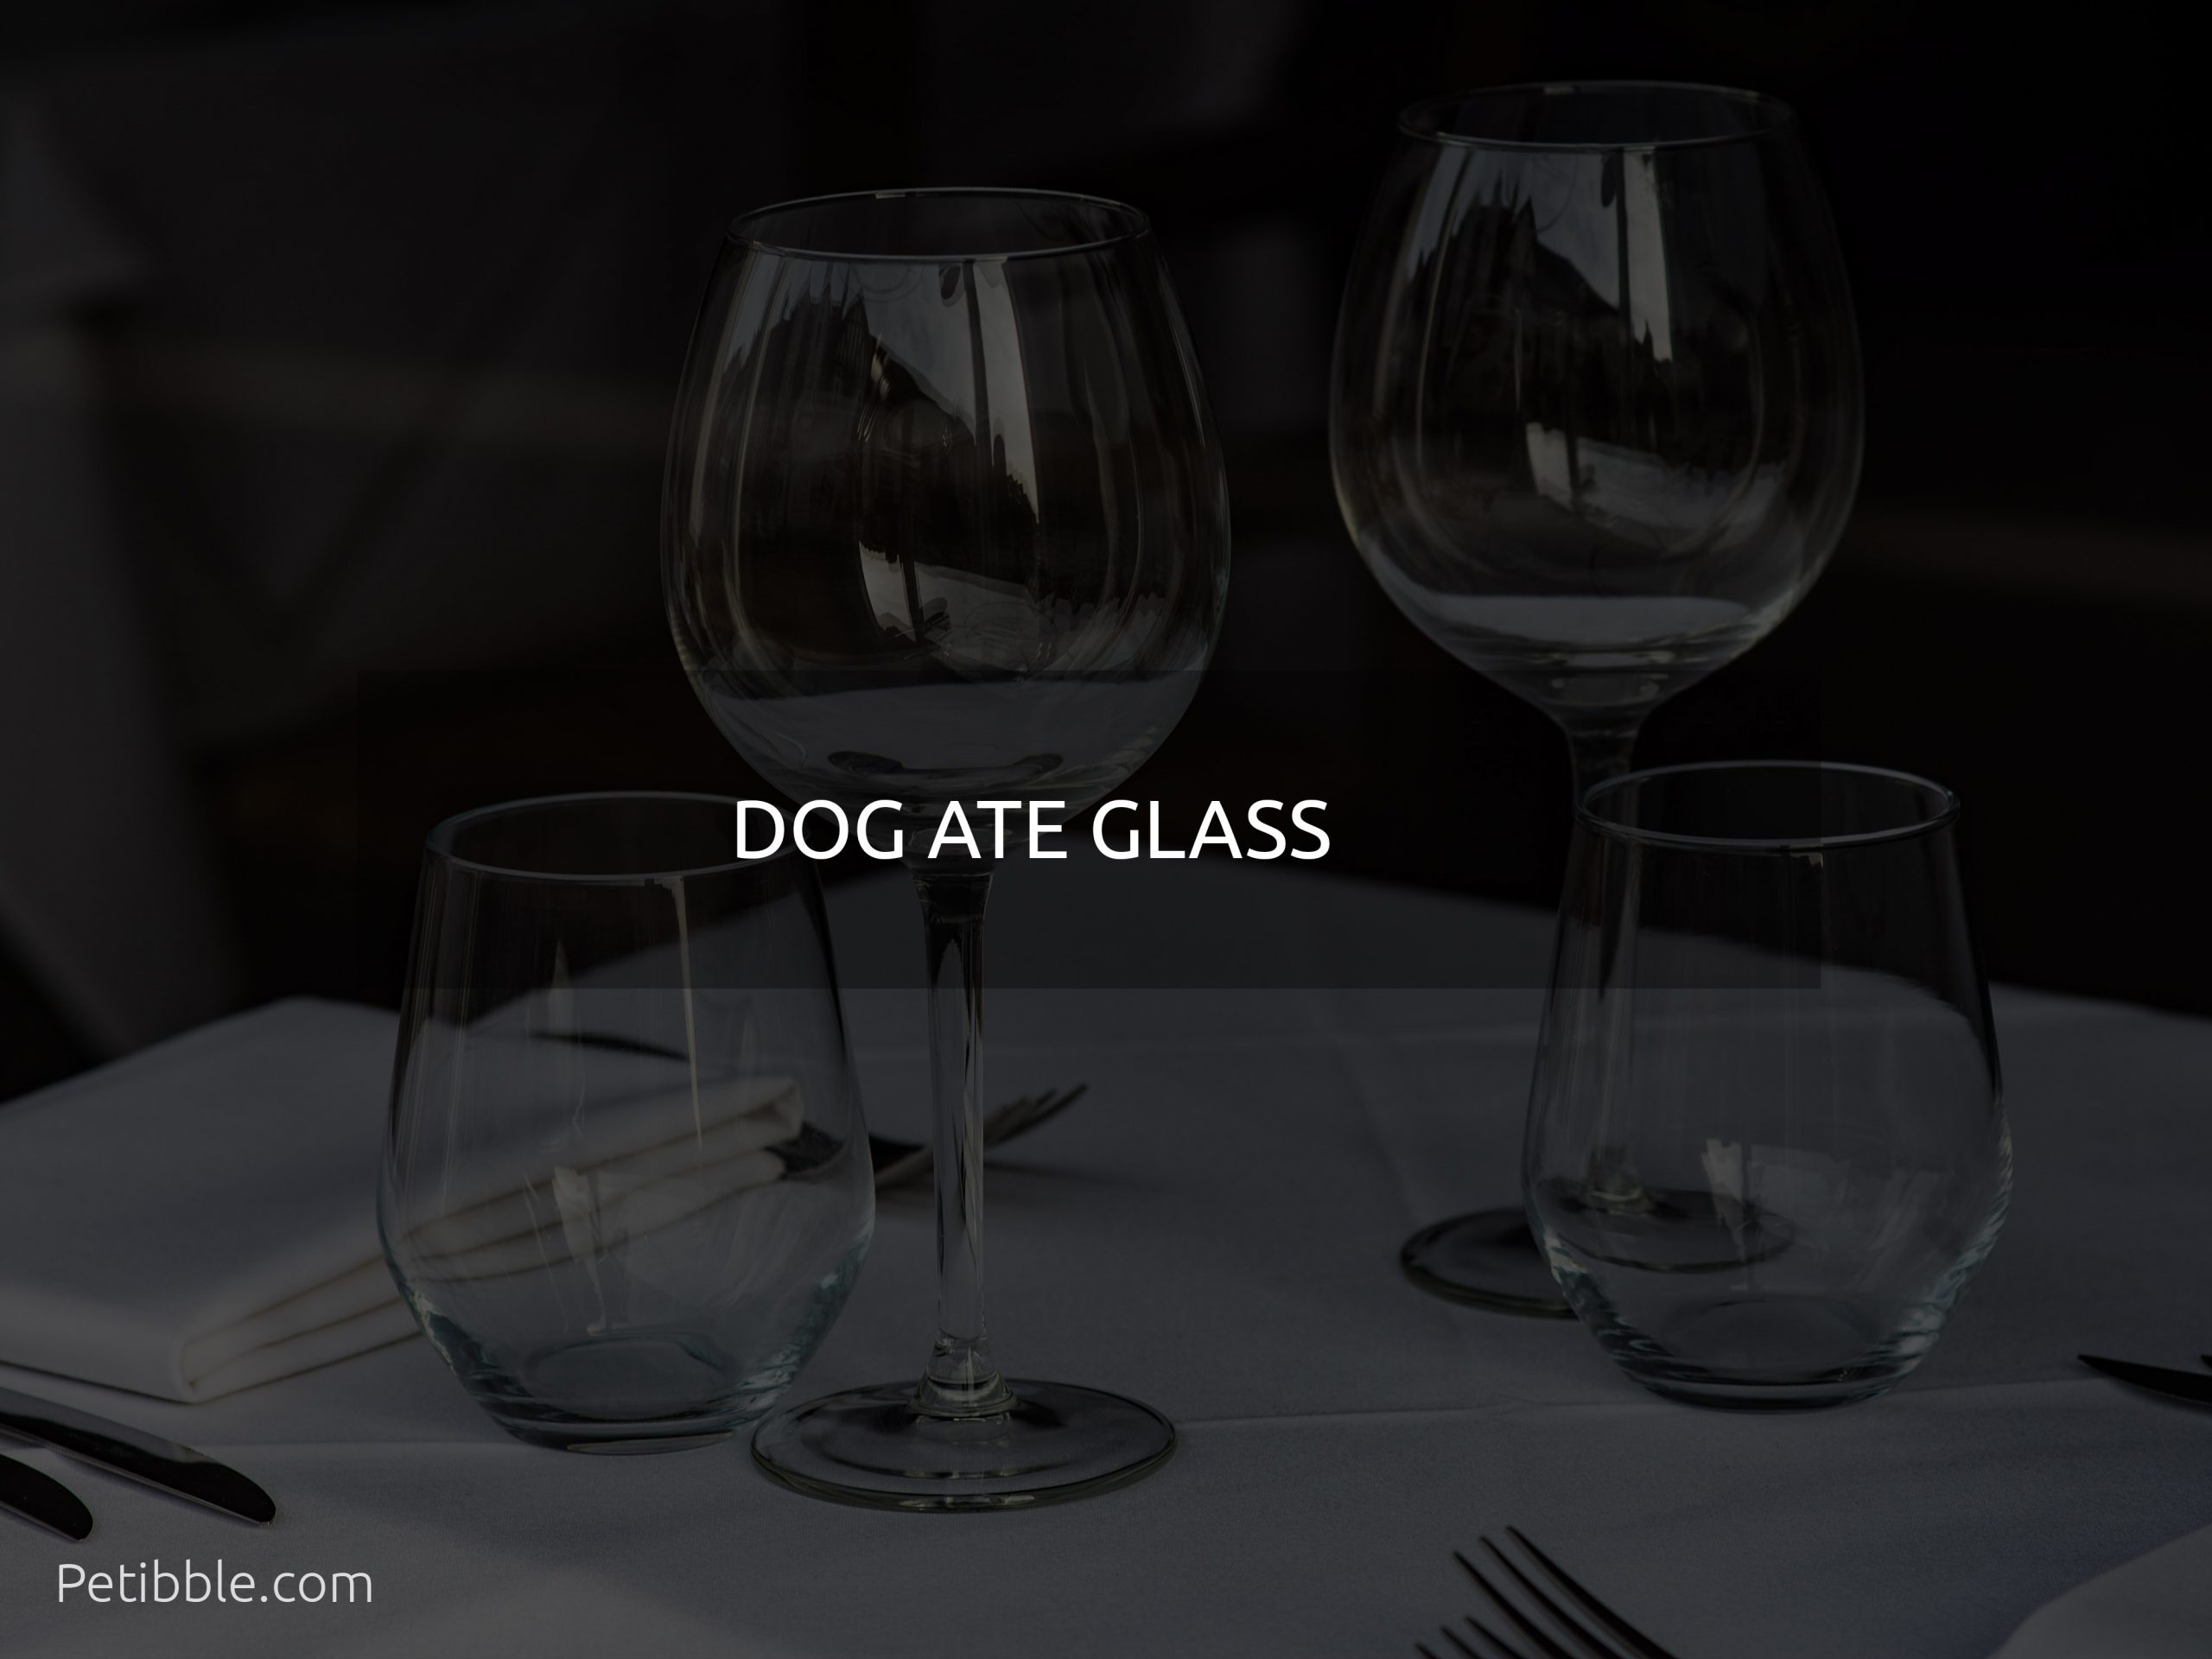 Dog ate glass